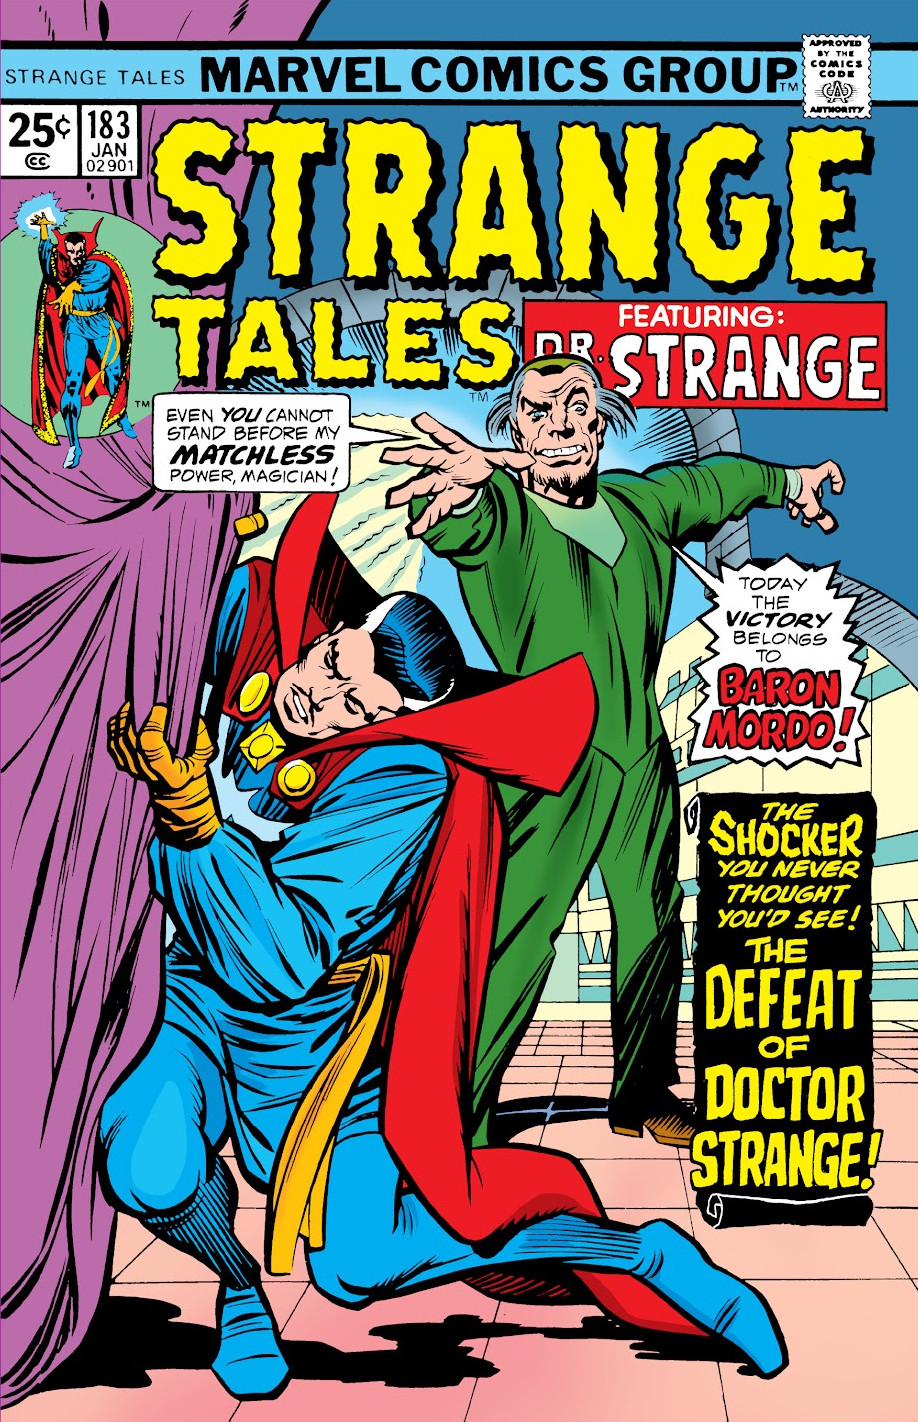 Start strange. Strange Tales. Strange Tales Dr. Strange. Strange Tales #180. Dr Strange in Comics.